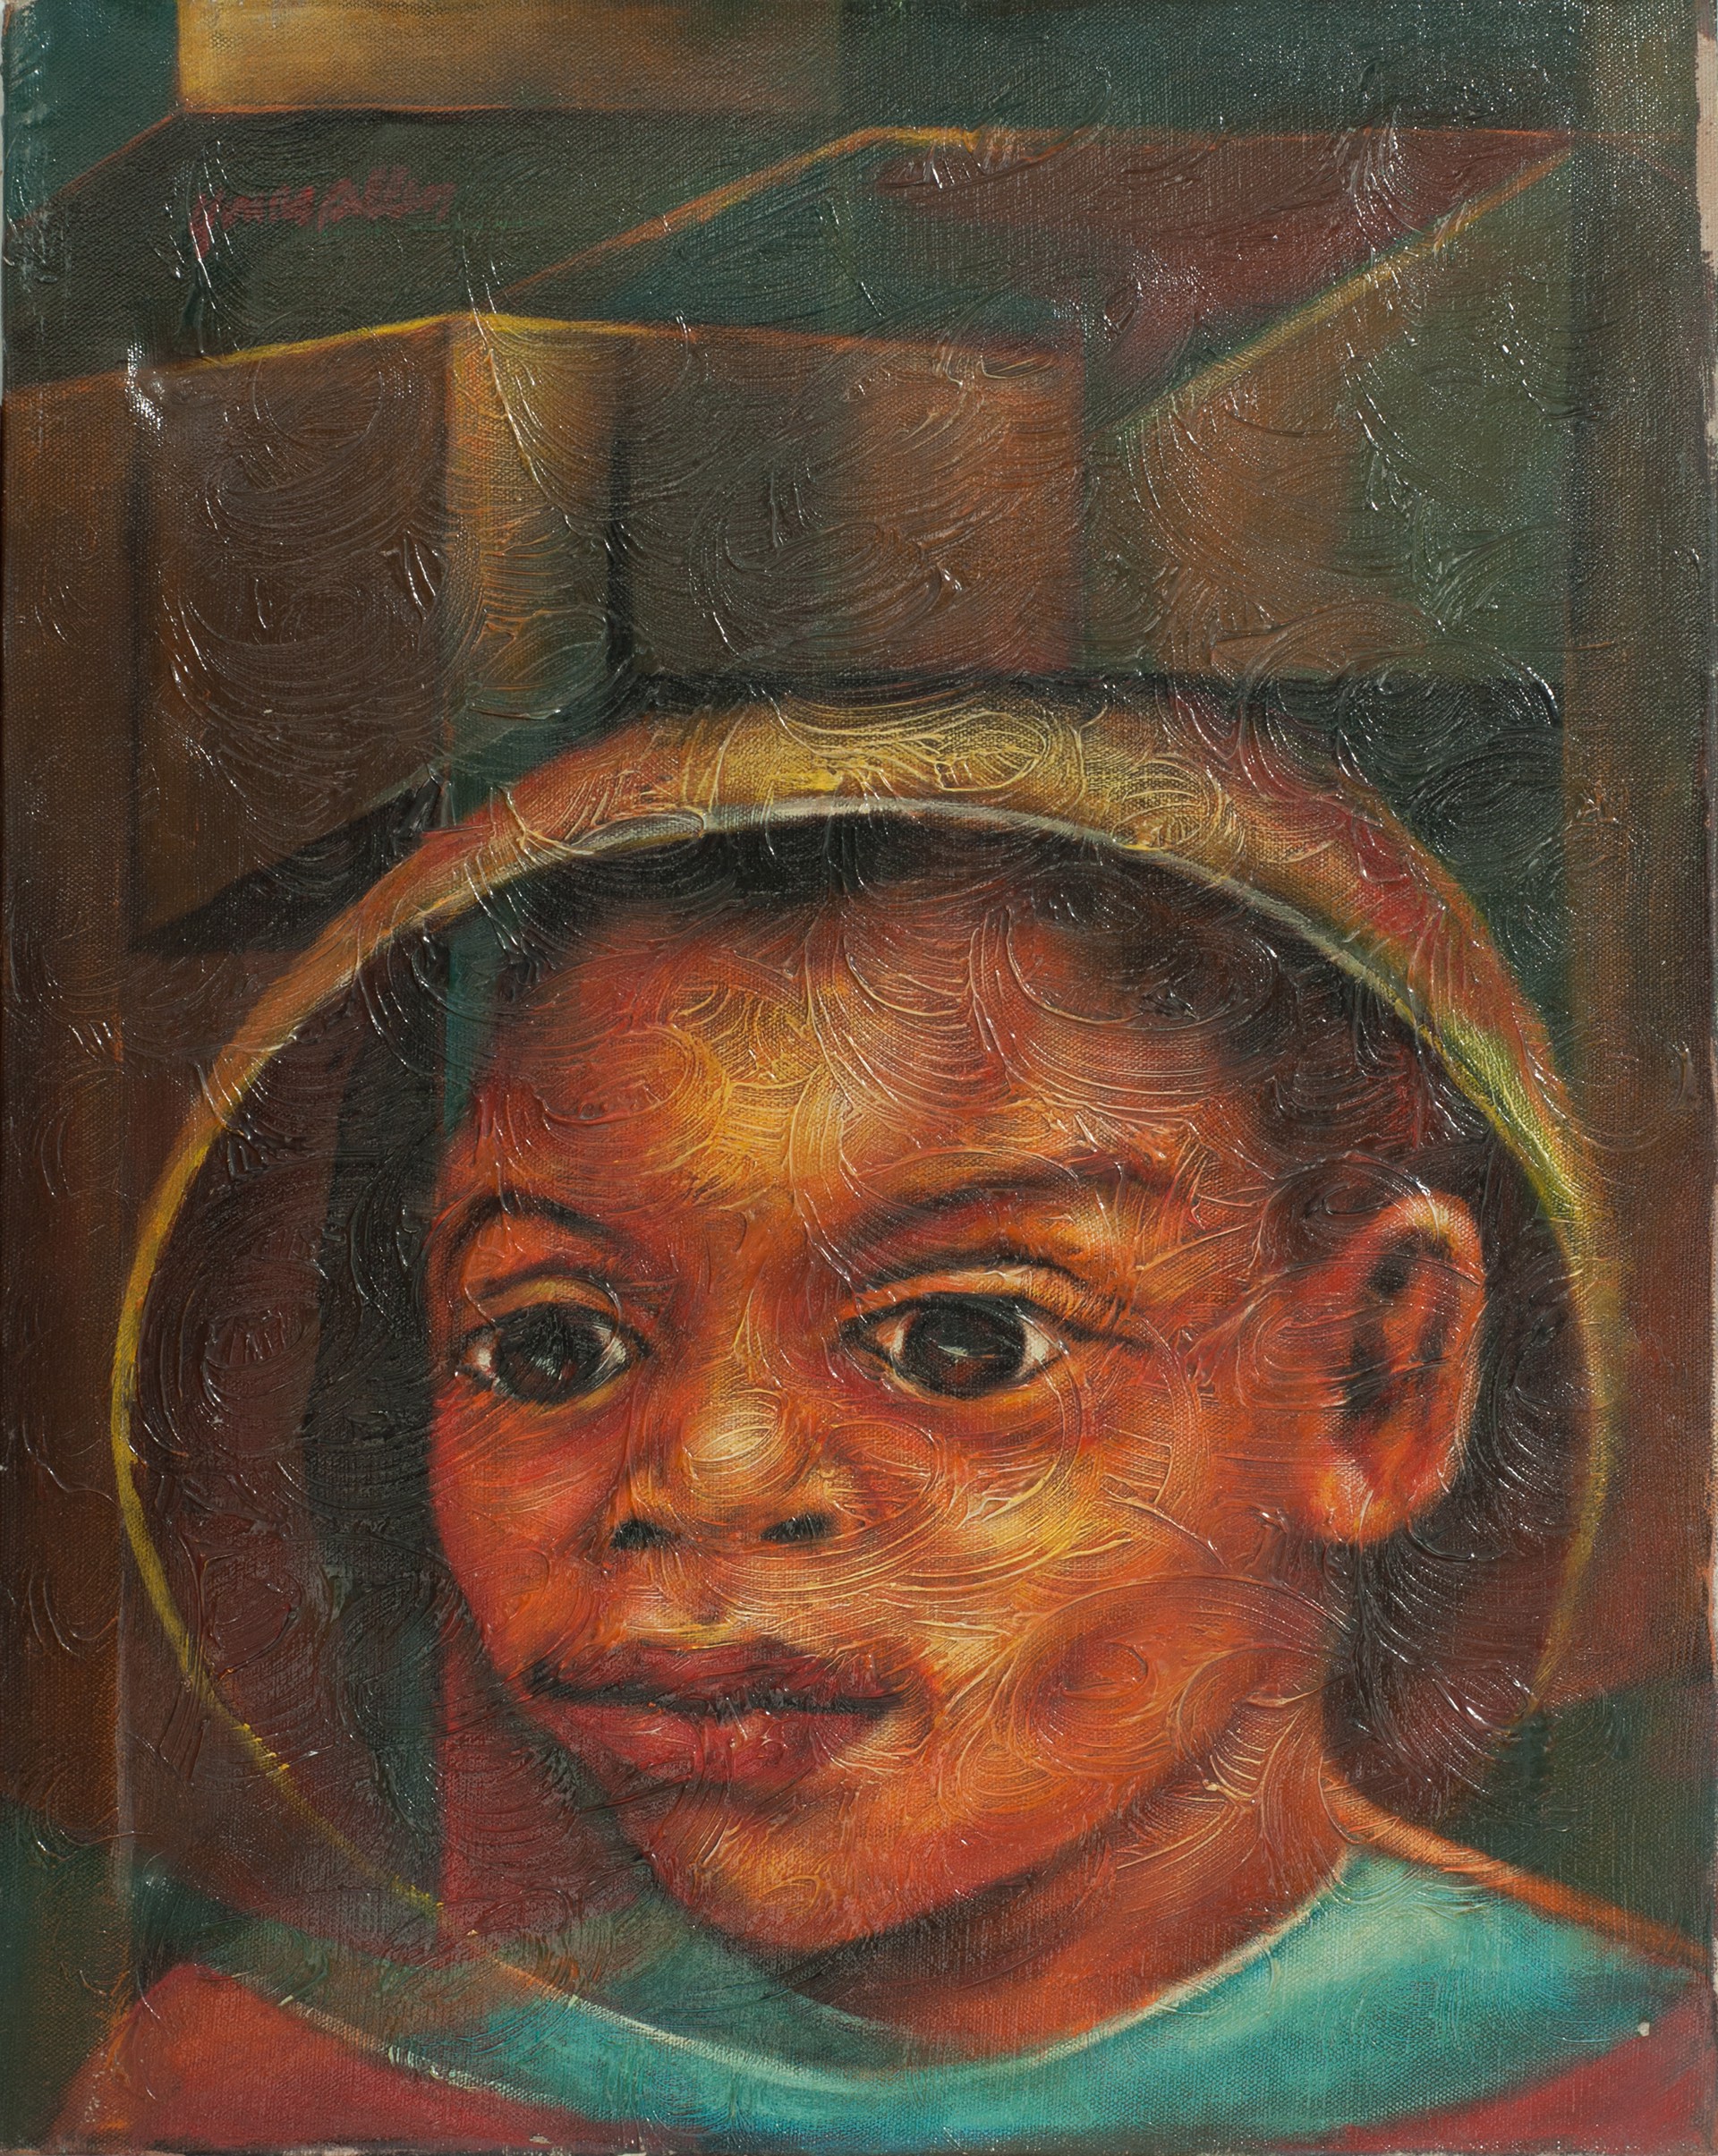 The Young Boy #3-3-96GSN by Jonas Allen (Haitian, b. 1955)